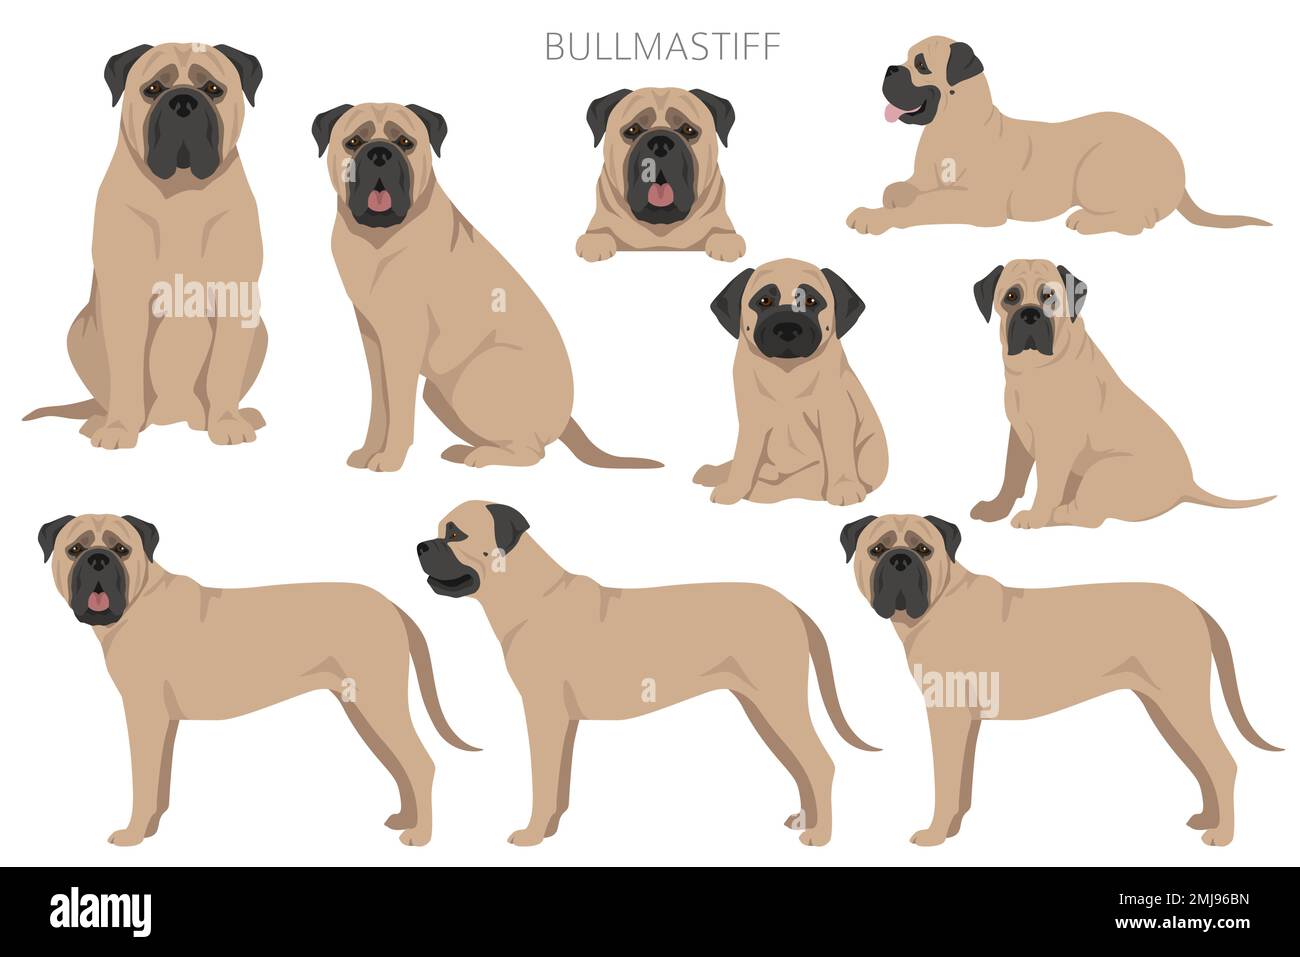 Bullmastiff dog clipart. All coat colors set.  All dog breeds characteristics infographic. Vector illustration Stock Vector